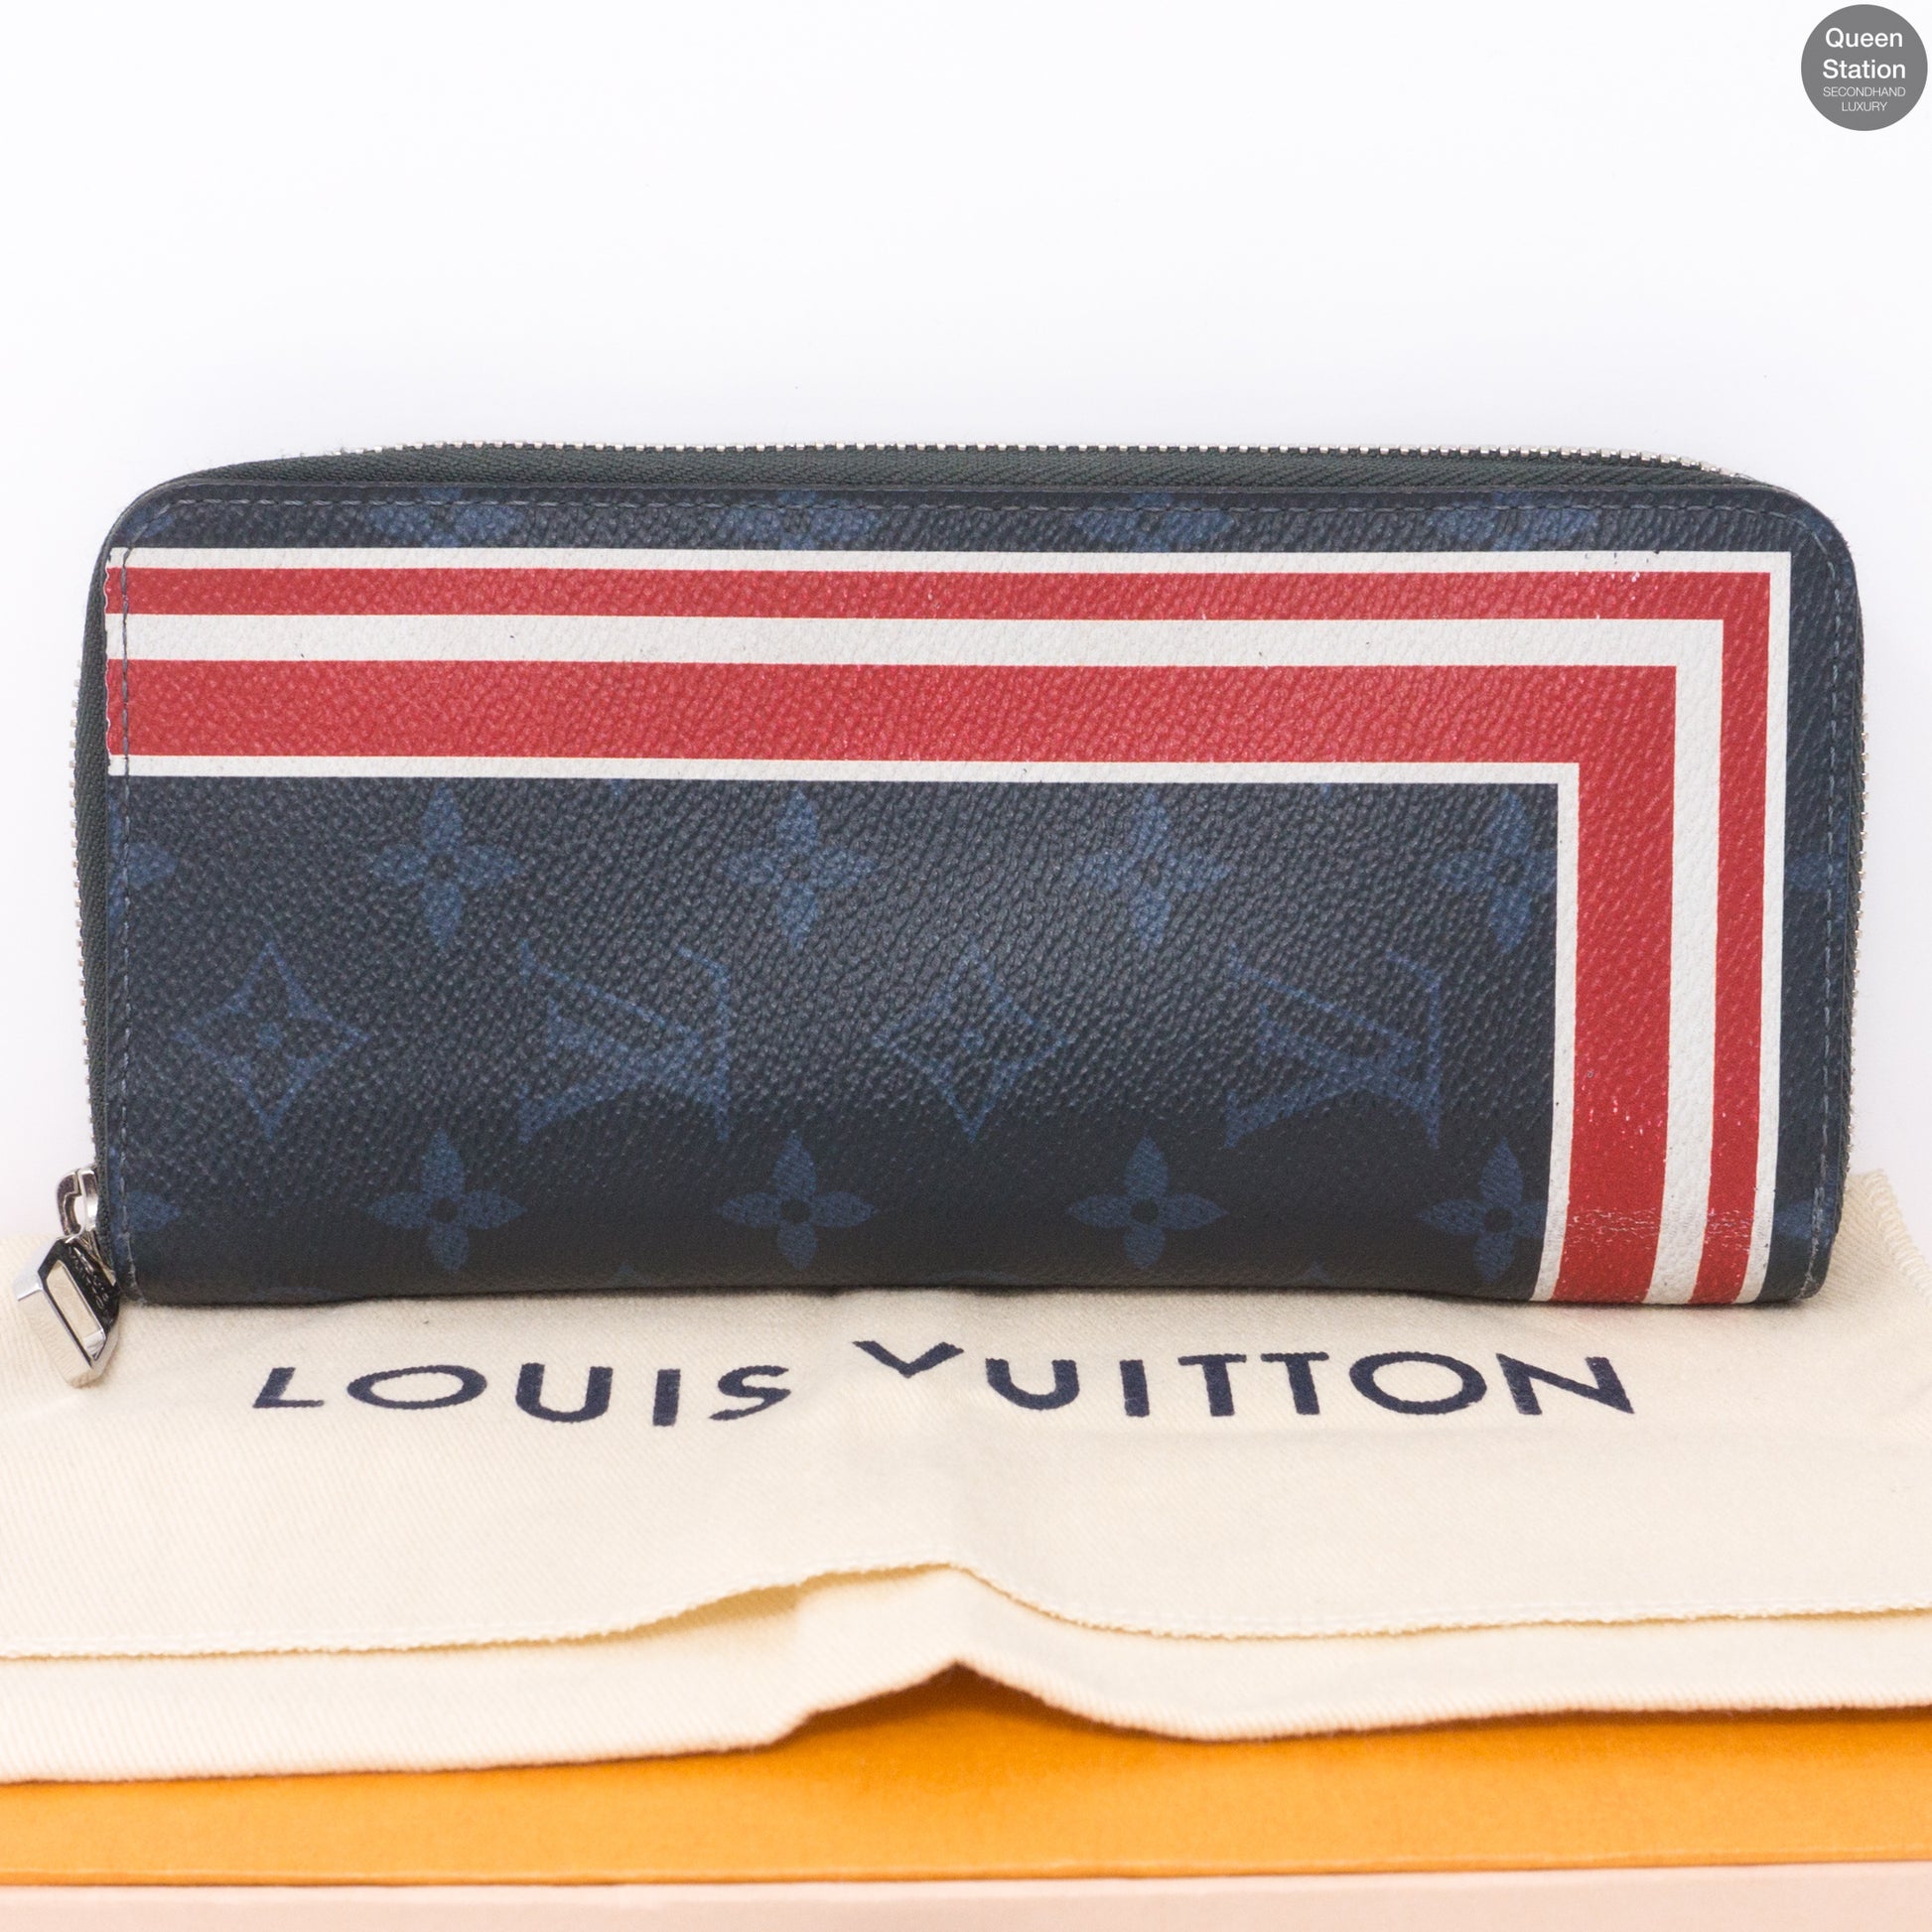 Louis Vuitton Zippy Wallet Vertical Eclipse Monogram Eclipse